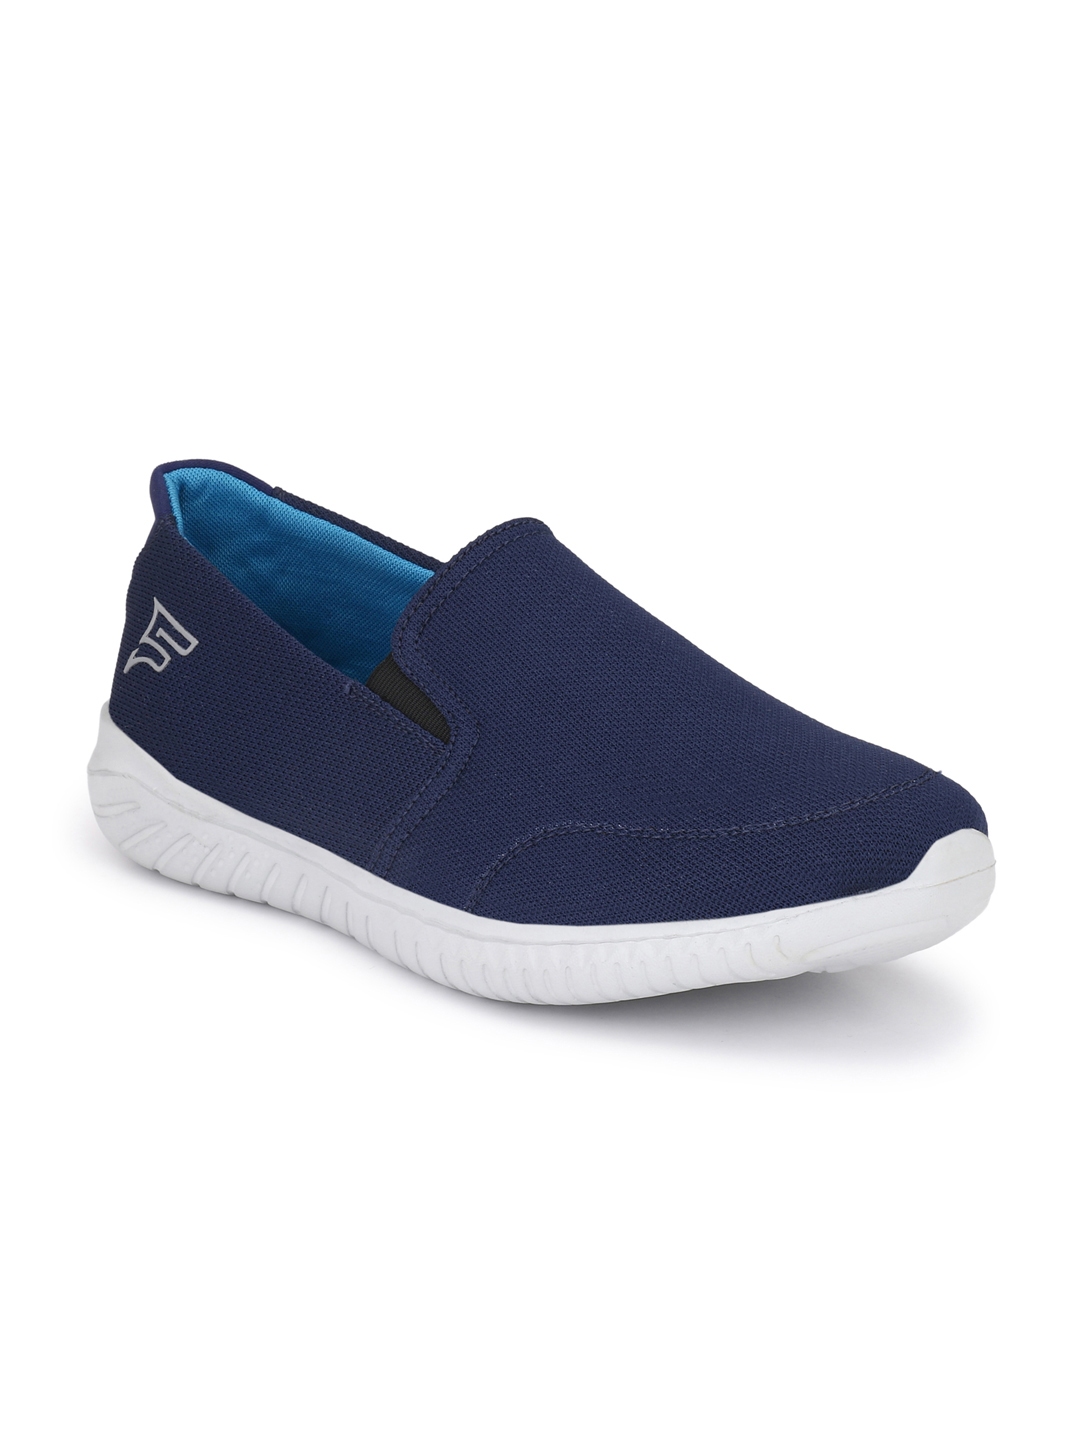 Buy Fentacia Men Blue Running Shoes - Sports Shoes for Men 7862457 | Myntra